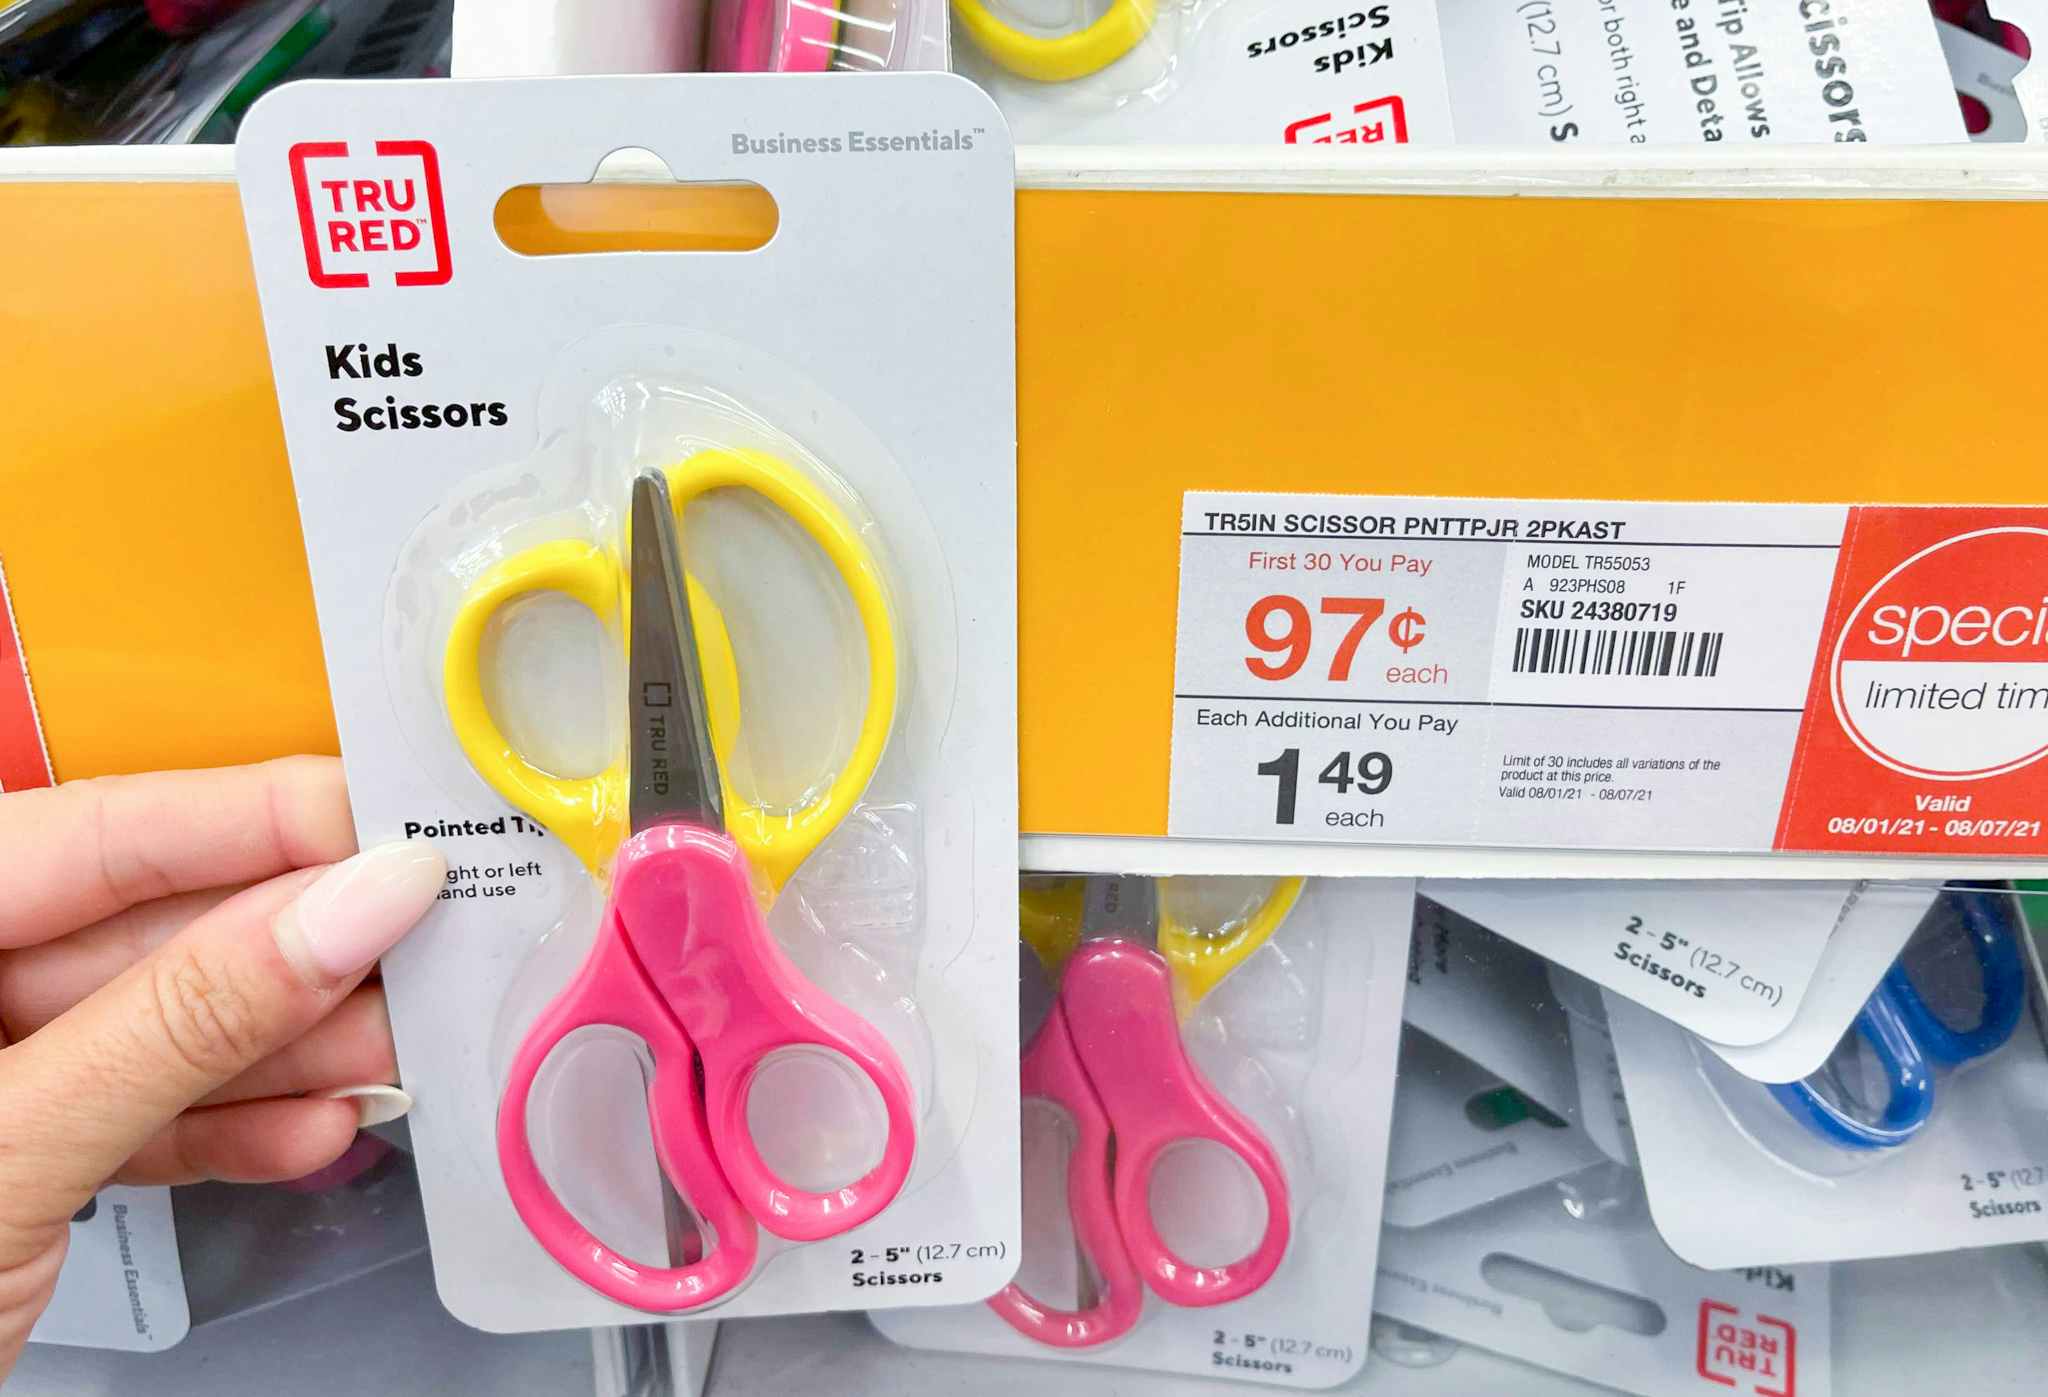 staples-tru-red-scissors-2021